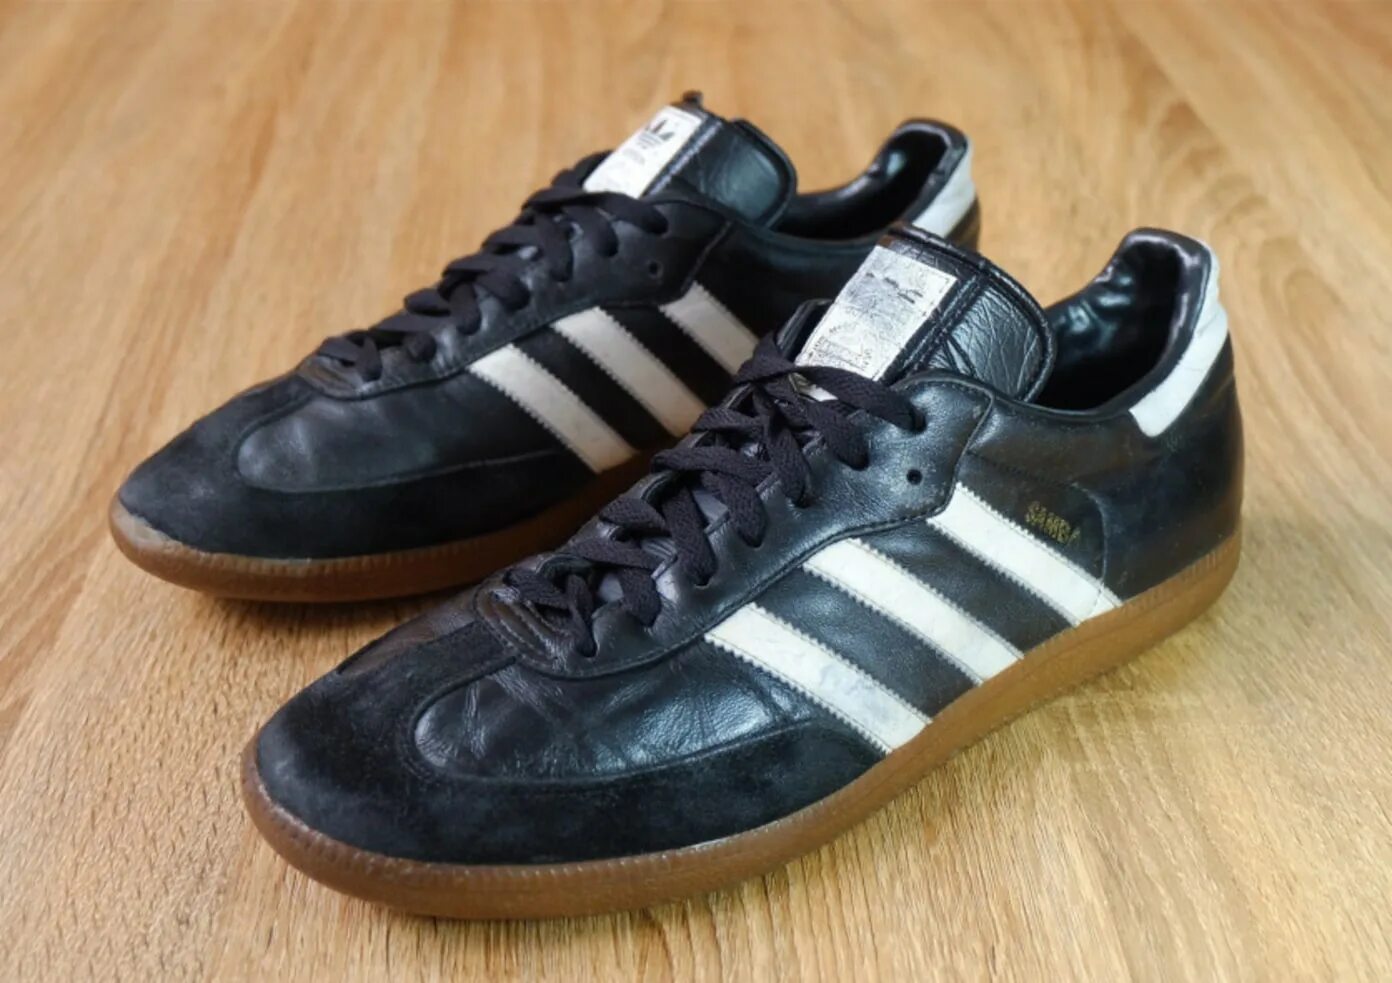 Adidas Samba Black Suede Germany. Adidas Samba 1980. Адидас Самба 2008. Adidas Samba old. Adidas samba pony wales